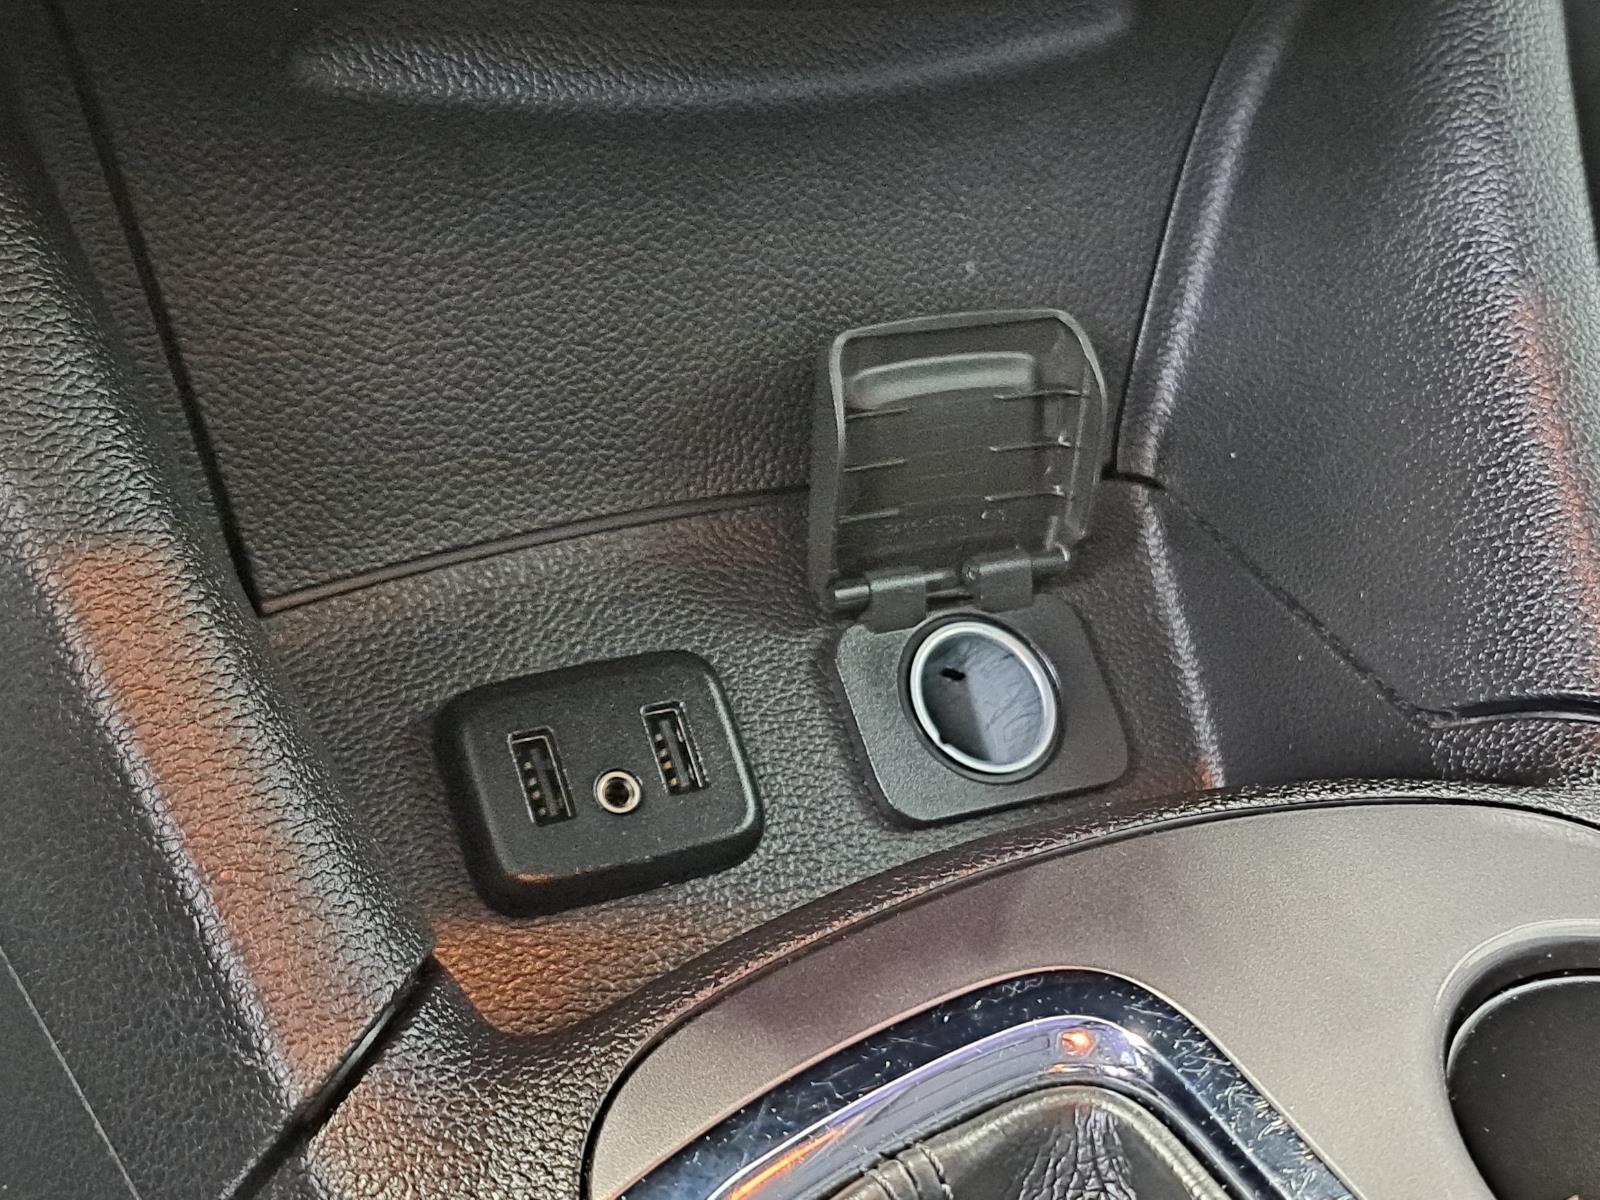 2019 Chevrolet Cruze LT Hatchback 4 Dr. Front Wheel Drive thumbnail 54